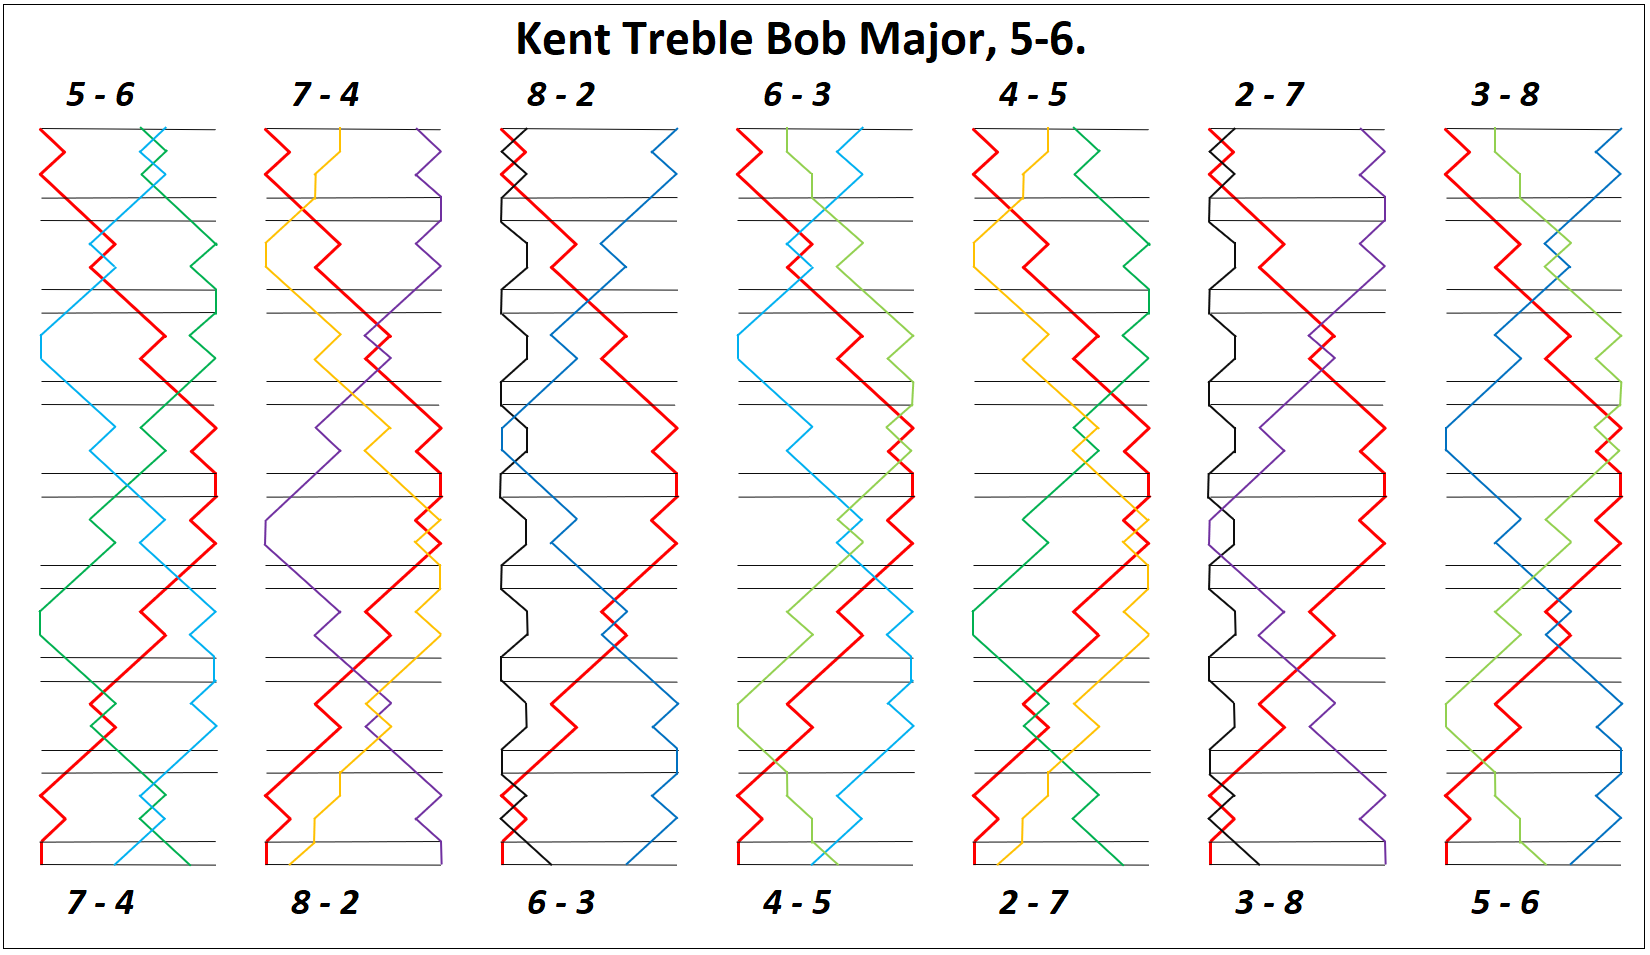 Kent Treble Bob Major Double line for 5-6